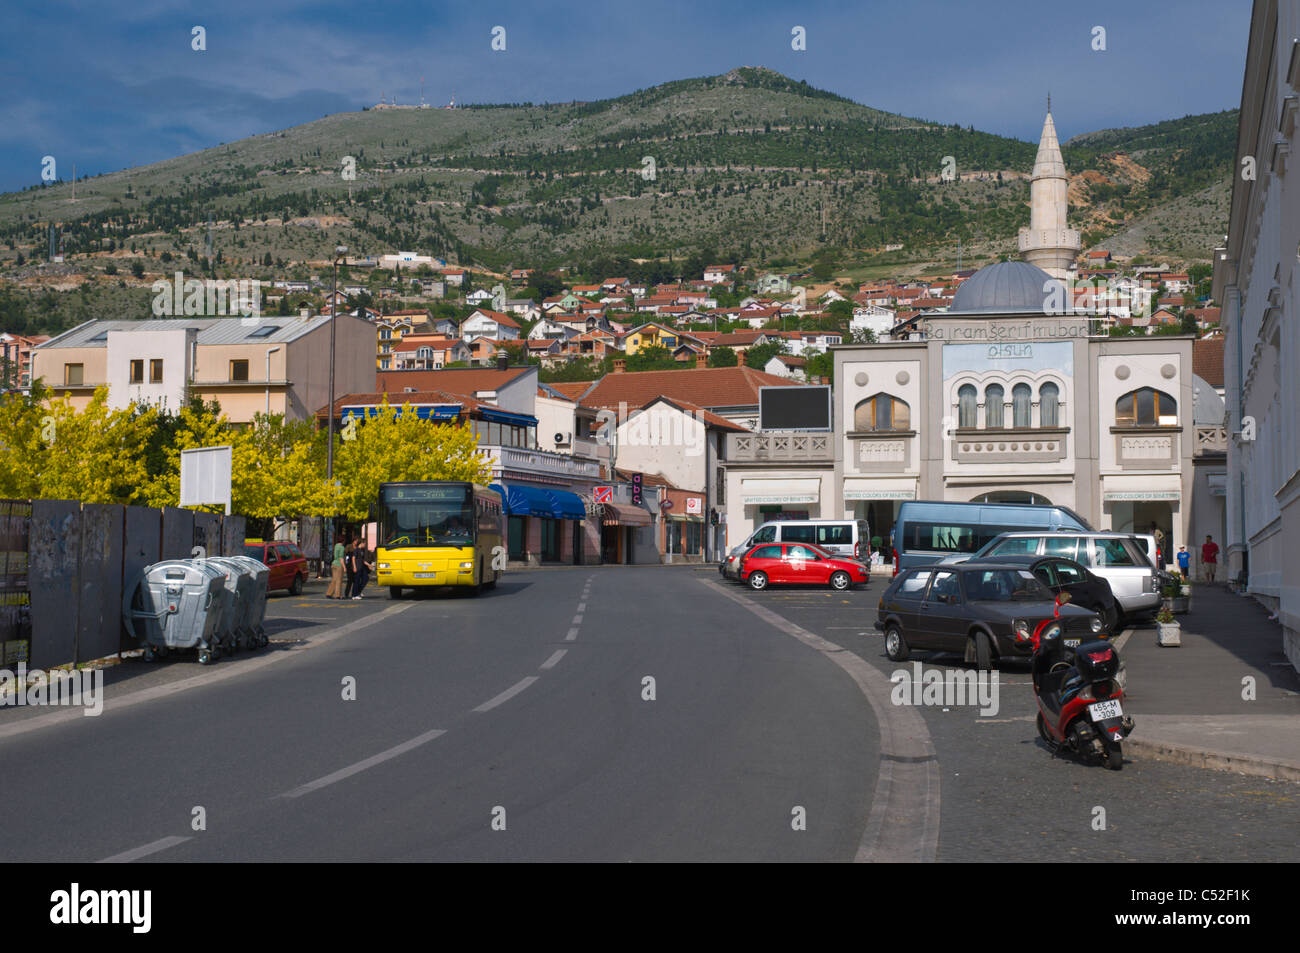 Mostarski Bataljon street central Mostar city Bosnia and Herzegovina Europe Stock Photo